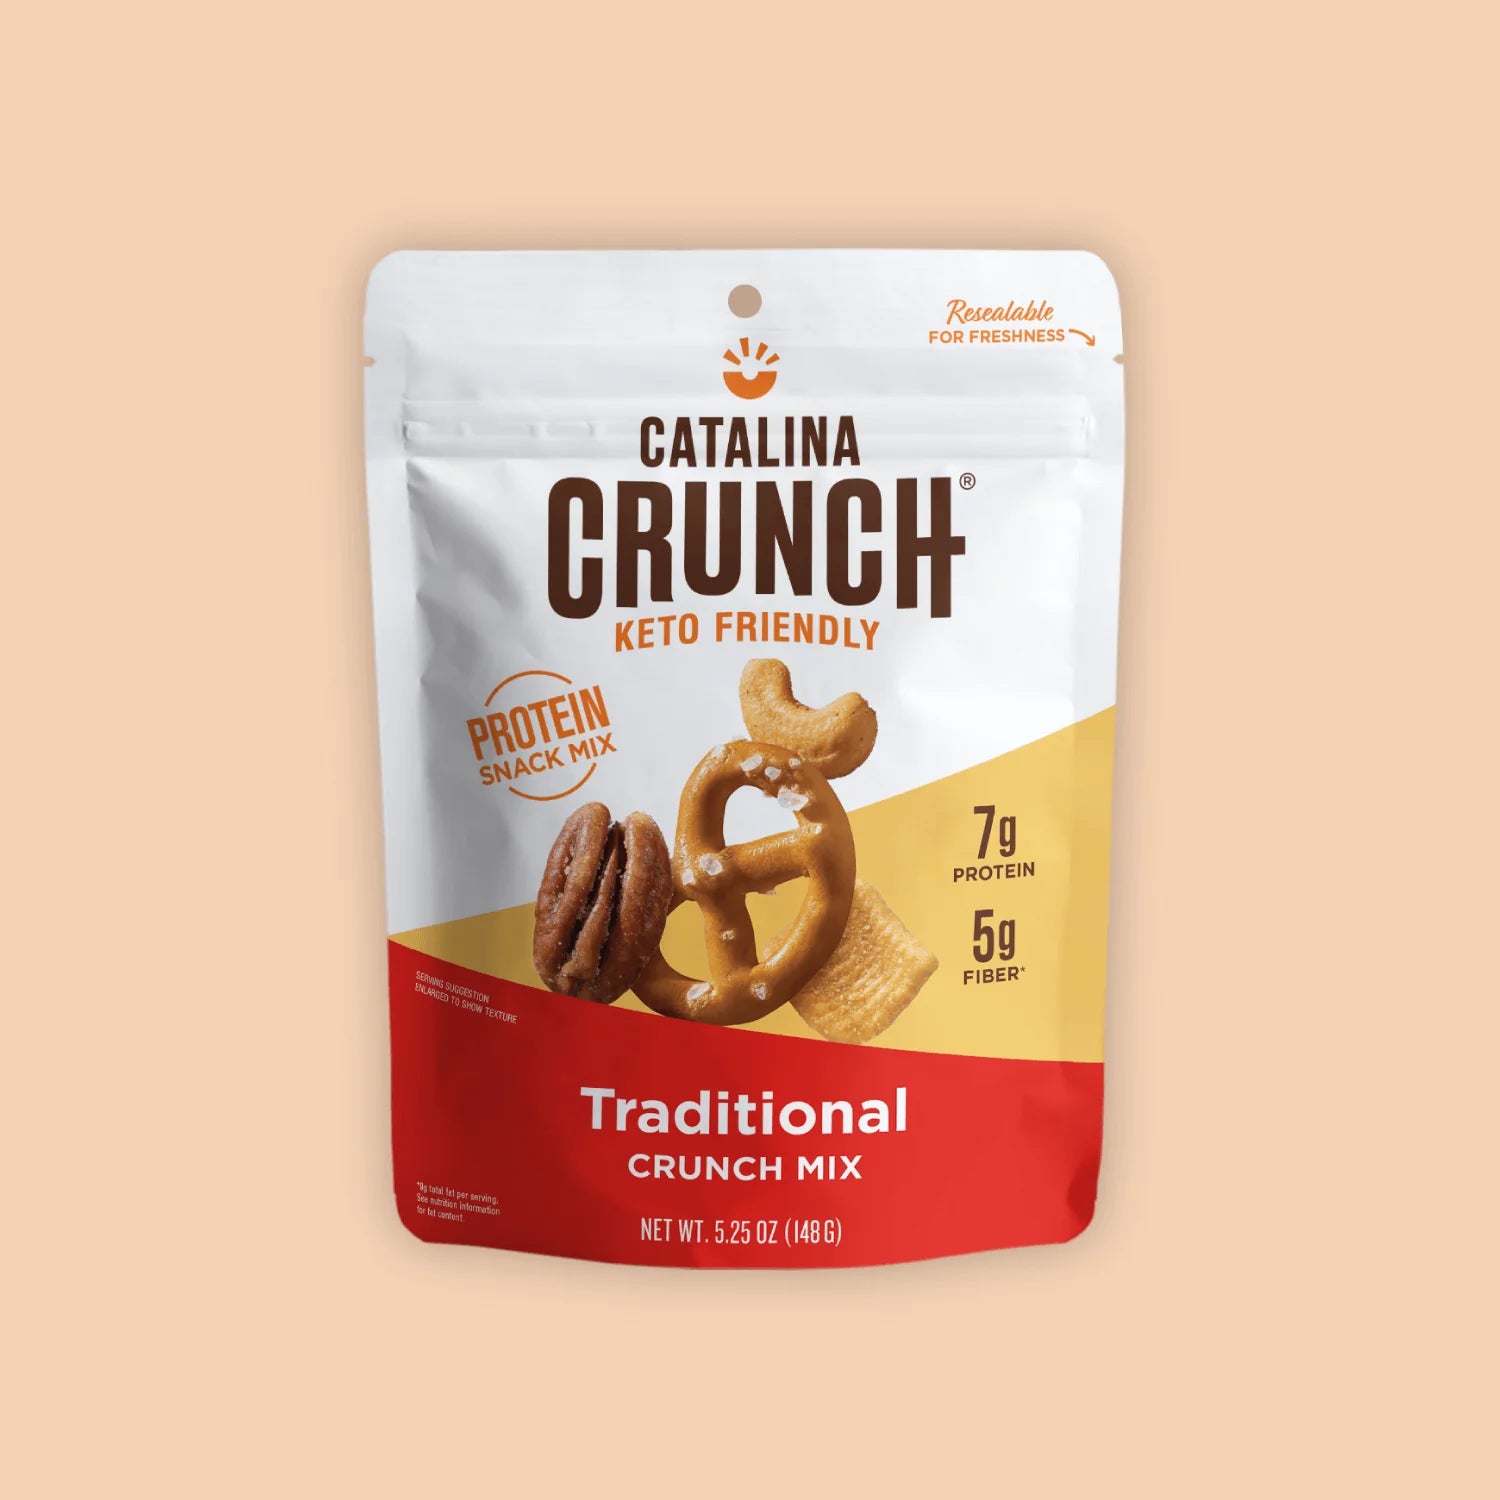 Catalina Crunch Snack Crunch Mix (1 bag) Traditional Catalina Crunch